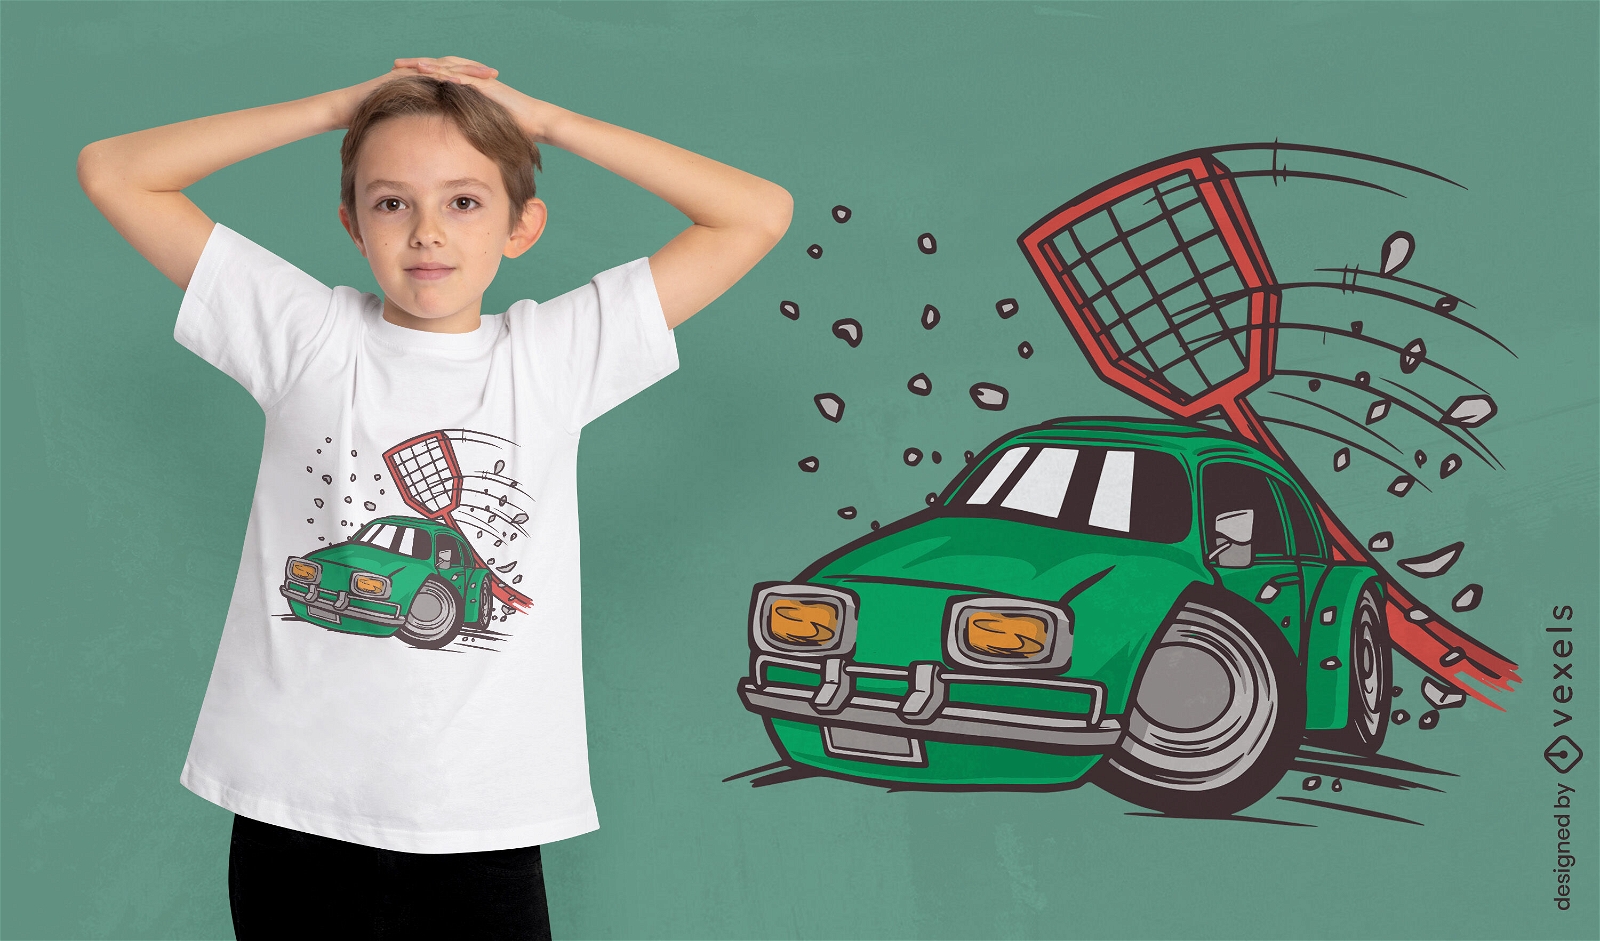 Car fly swatter t-shirt design